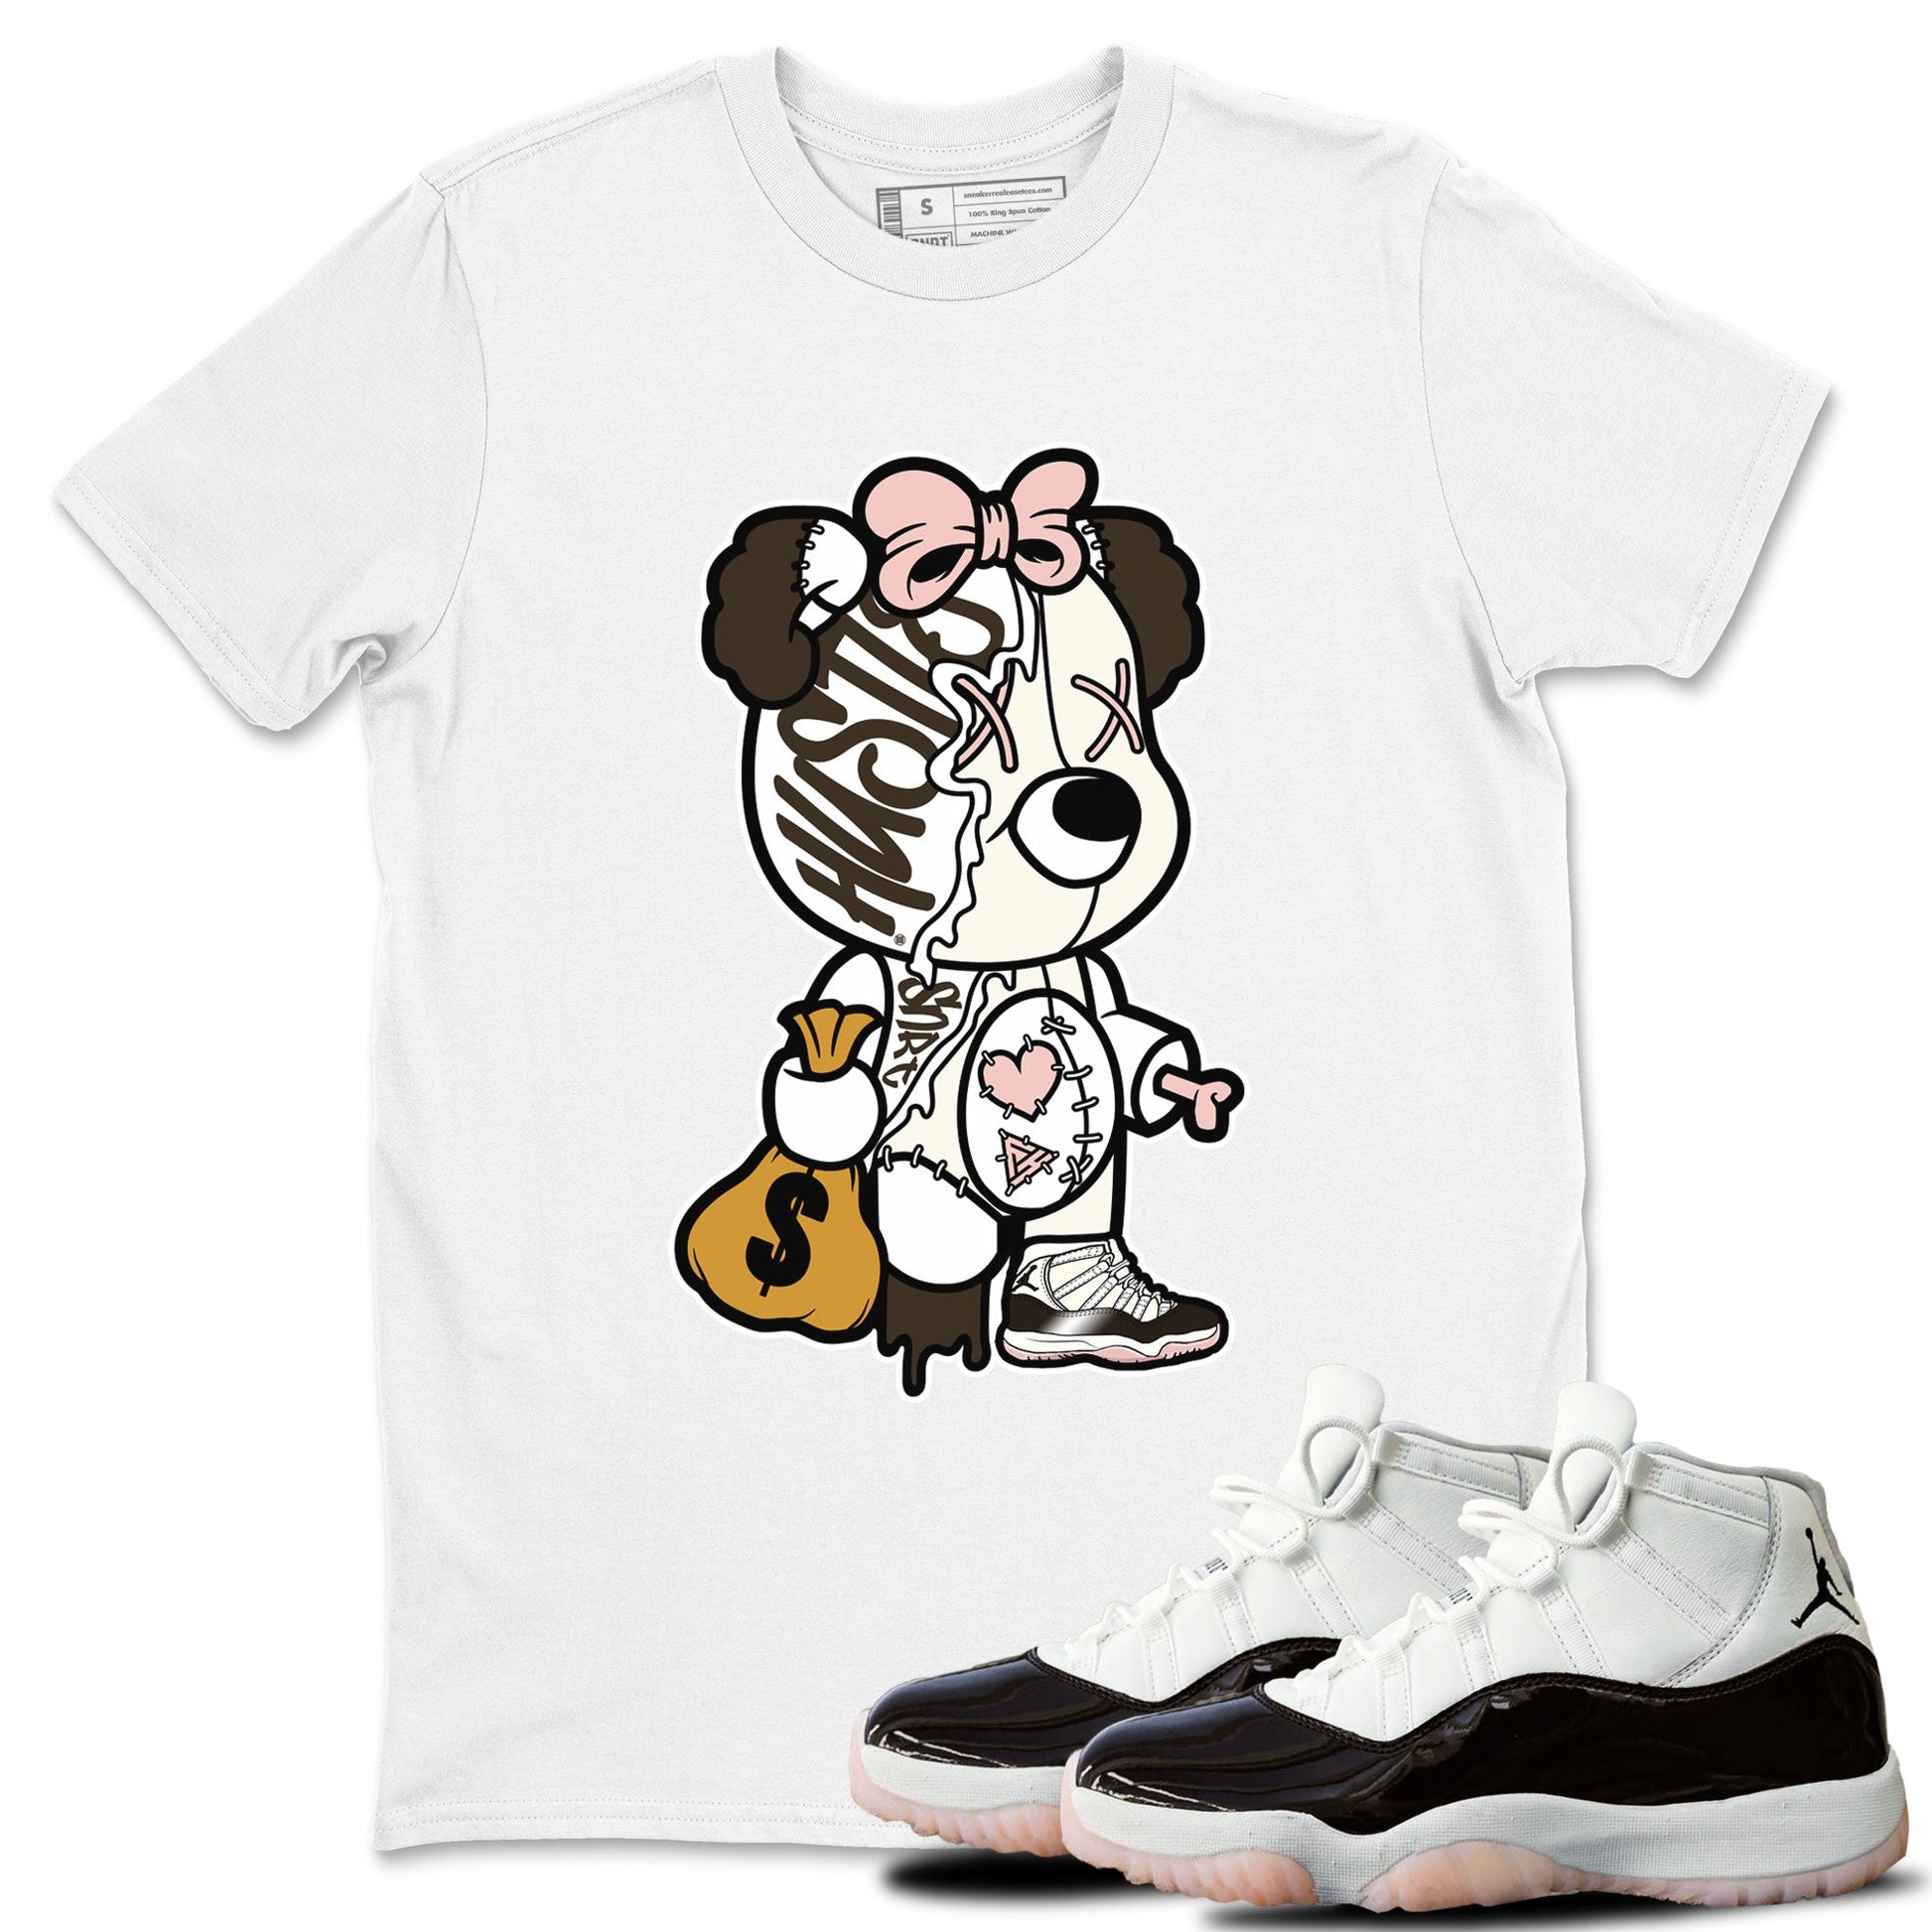 Jordan 11 WMNS Neapolitan sneaker shirt to match jordans Stitched Hustle Bear sneaker tees Air Jordan 11 Neapolitan SNRT Sneaker Release Tees Cotton Sneaker Tee White 1 T-Shirt